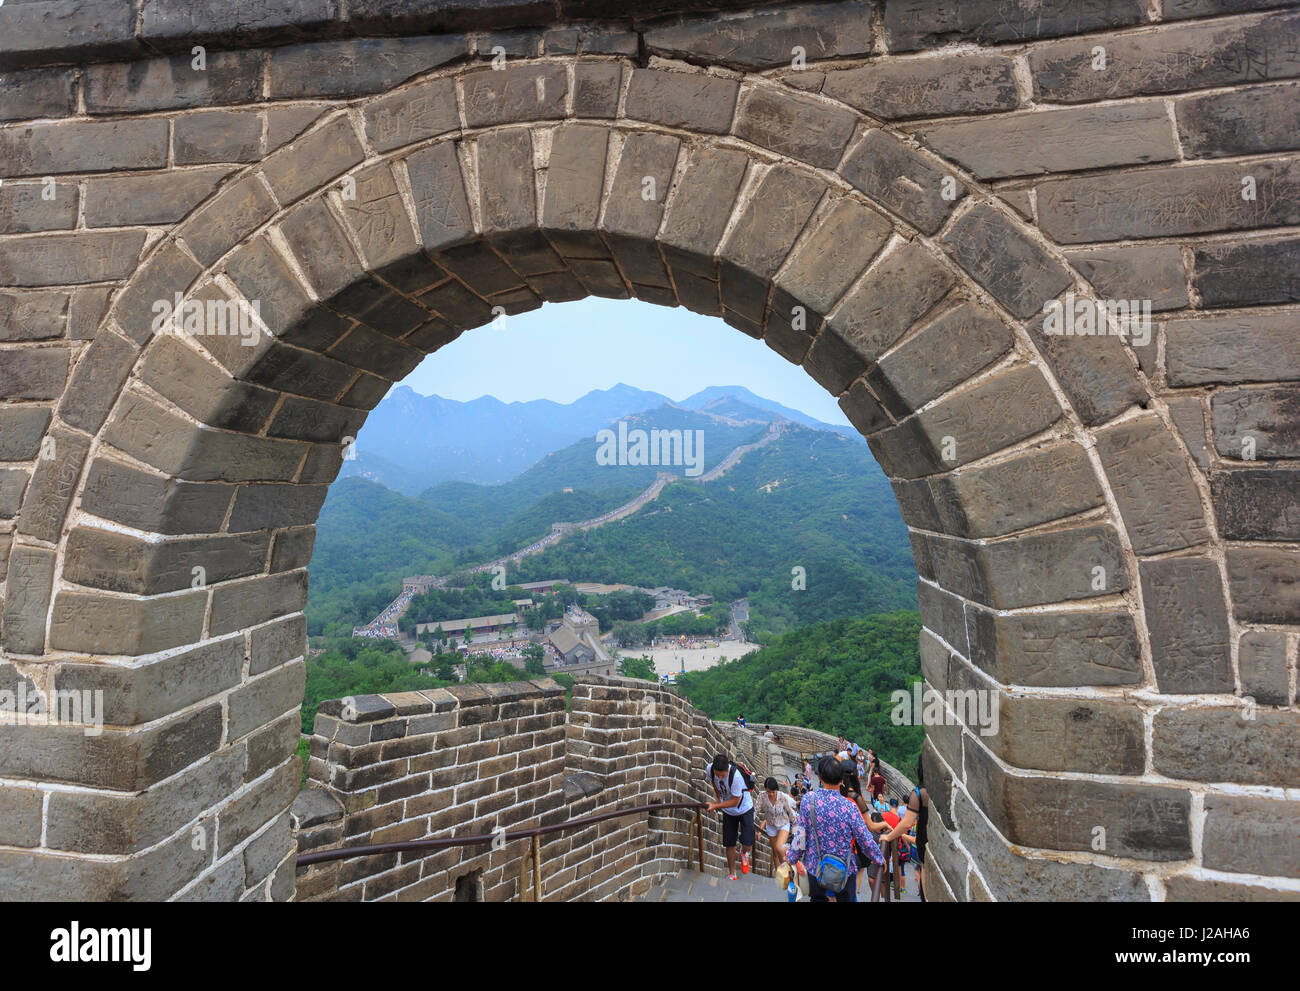 Die große Mauer, moderne Seven Wonders Of The World, Qianjiadian Scenic Area, East Teil von Yanqing Geopark, in der Nähe von Peking, China Stockfoto